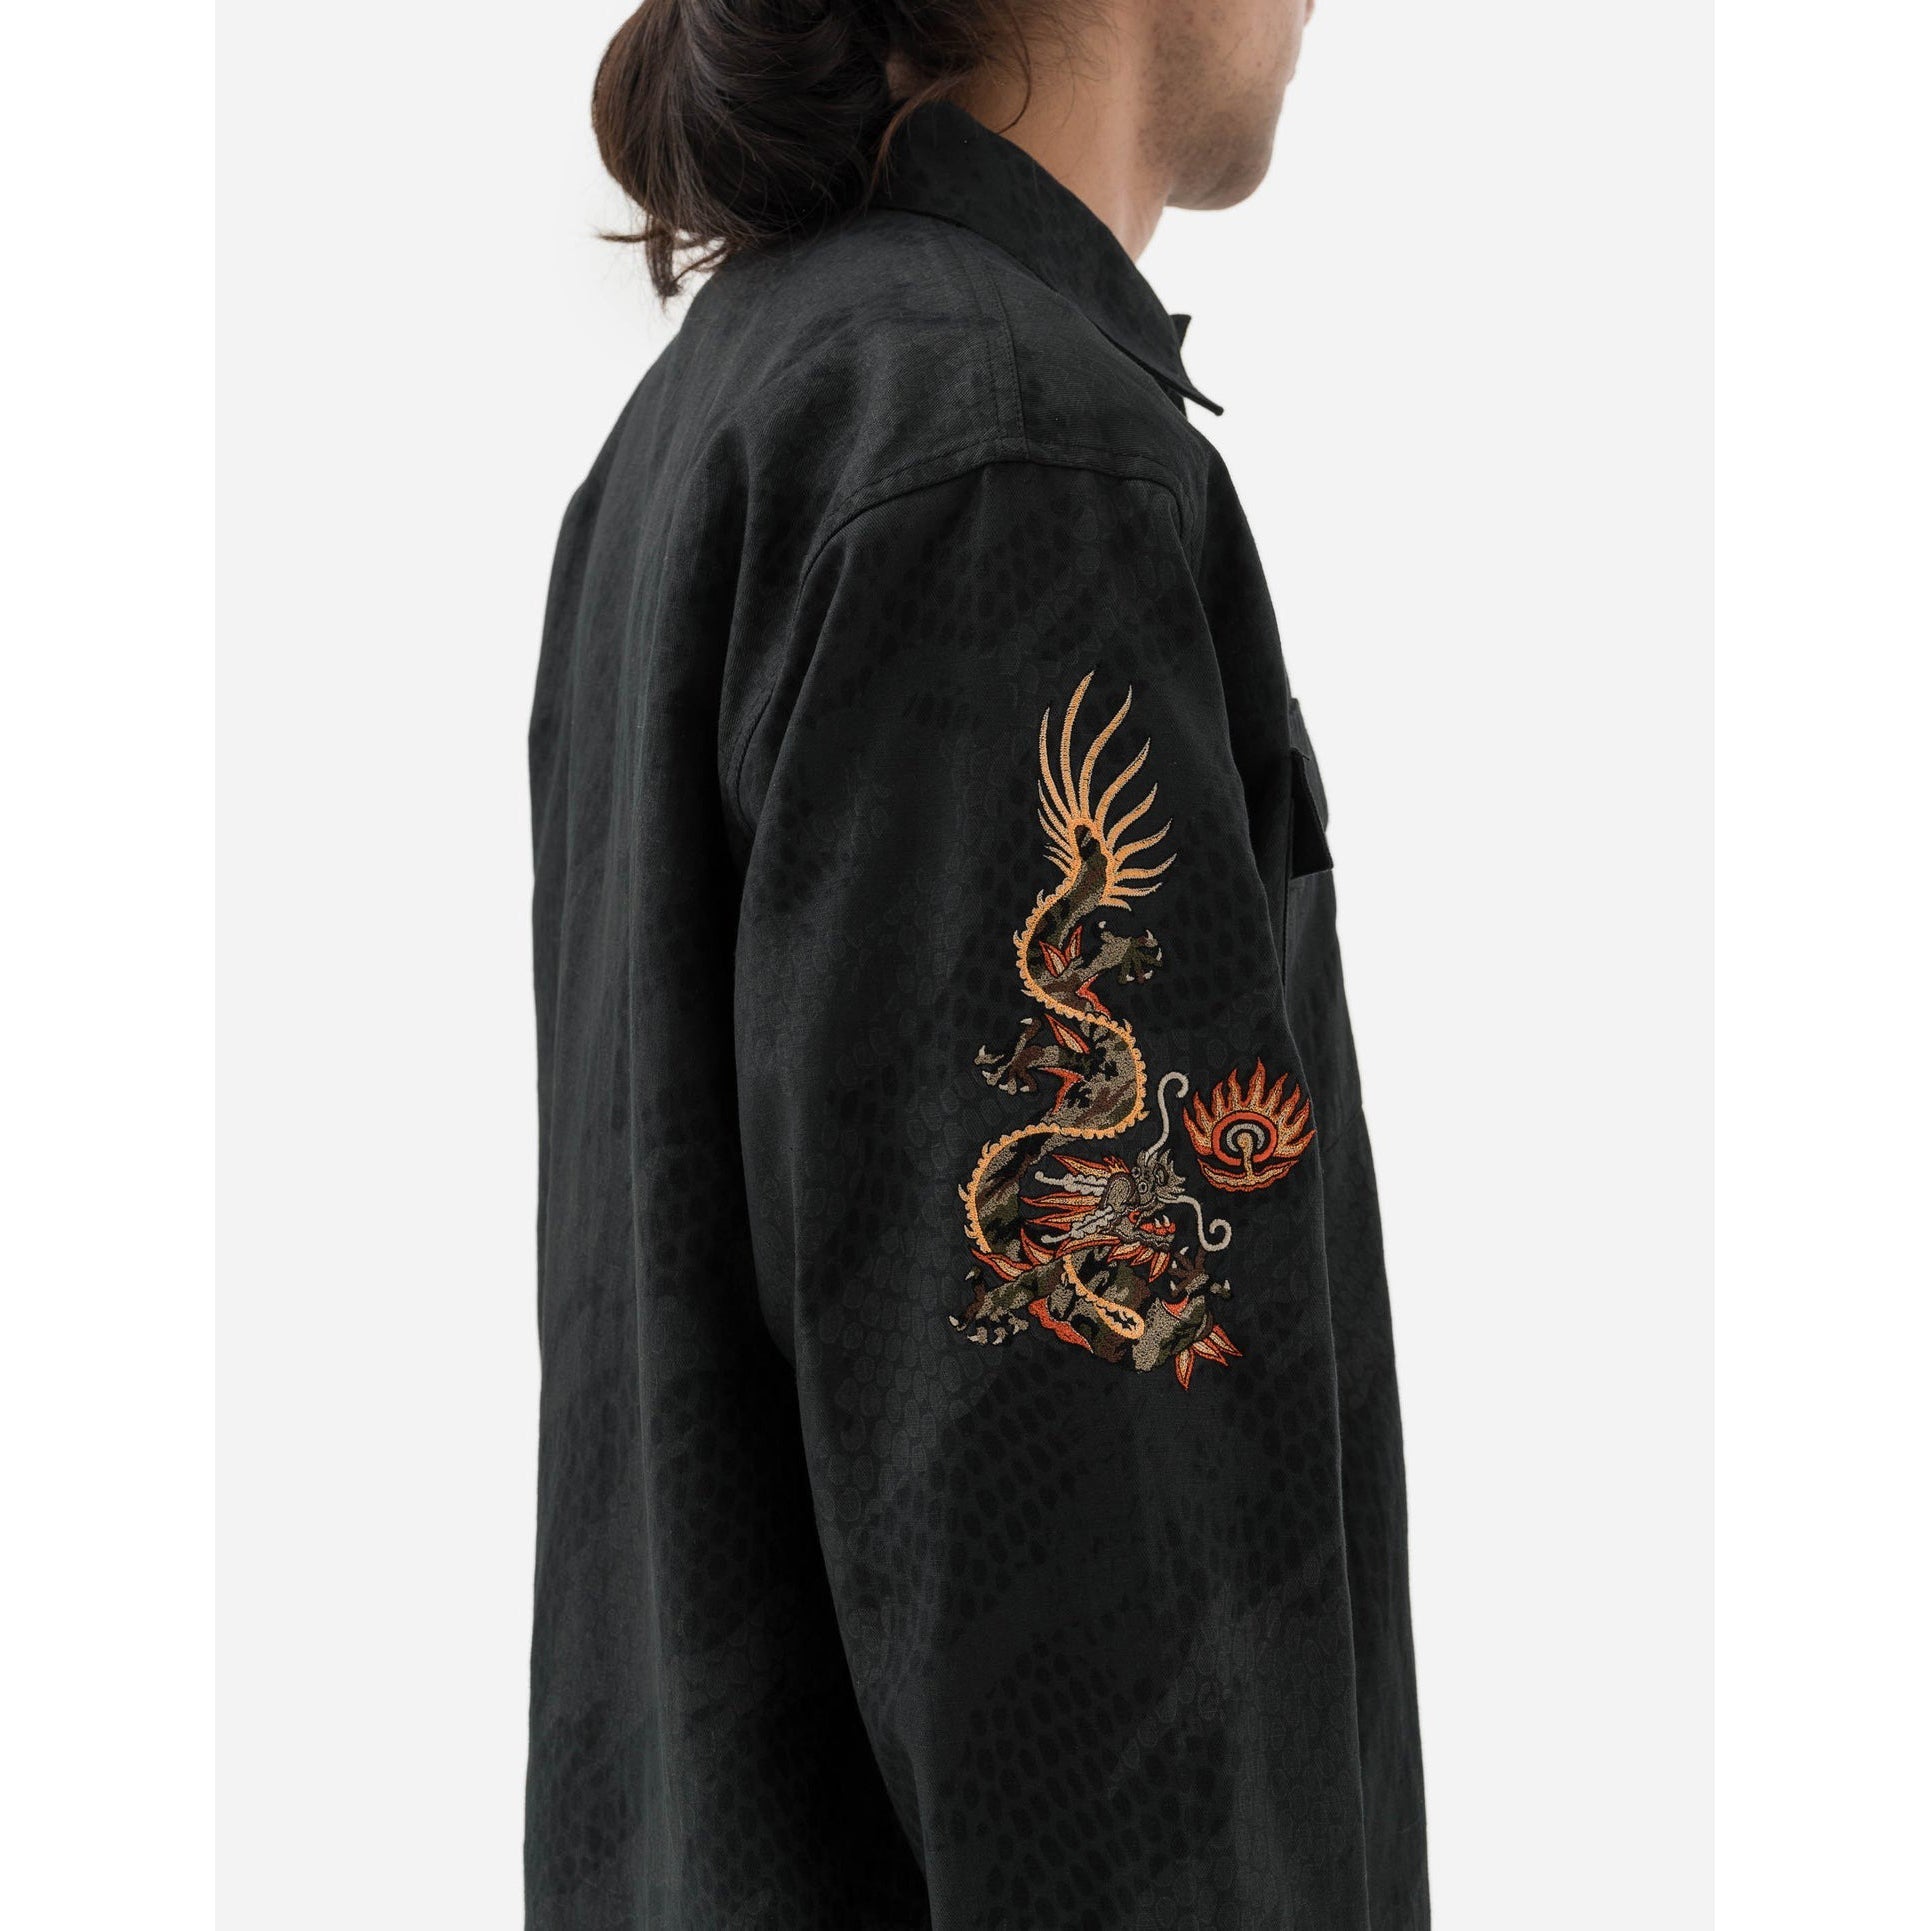 Maharishi Men Original Dragon Camo Overshirt Subdued Night - OUTERWEAR Canada